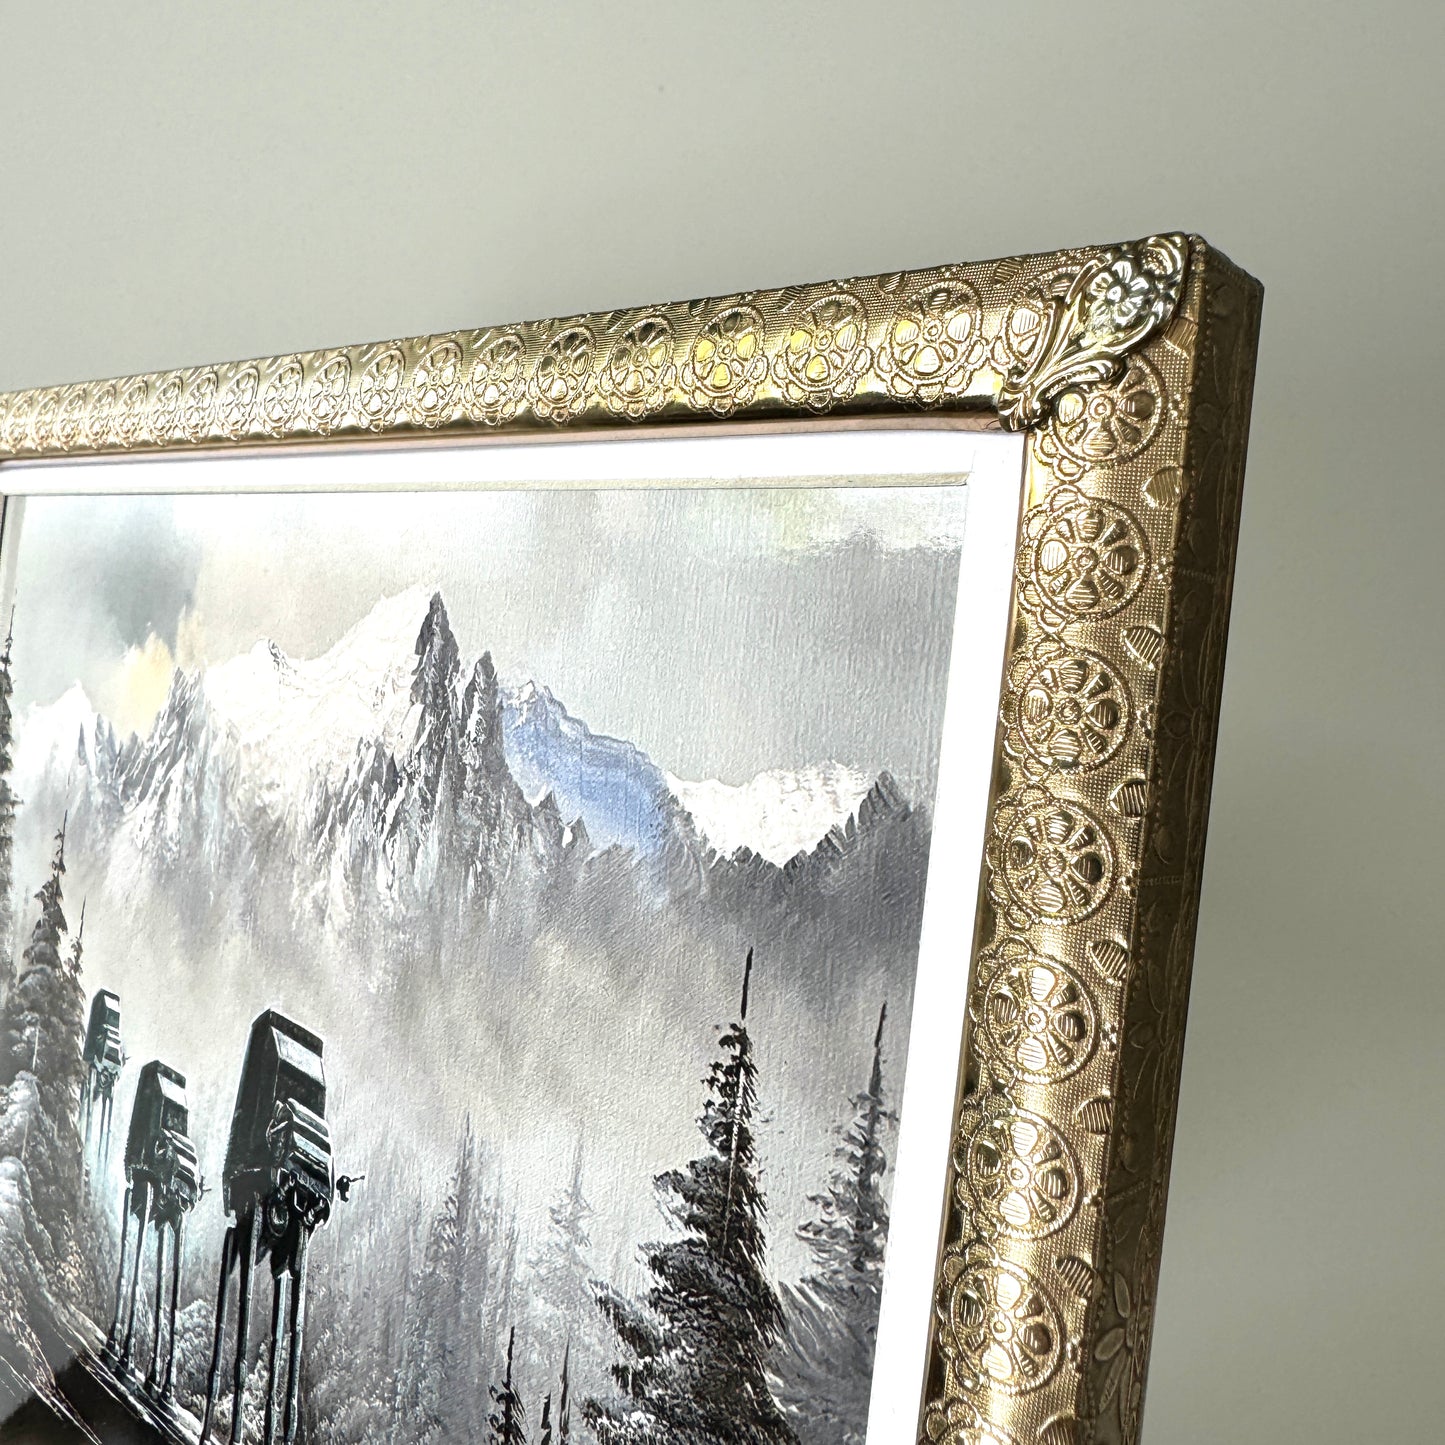 Walkers in a Winter Wonderland - 8x10 PRINT in Vintage Ornate Brass Frame